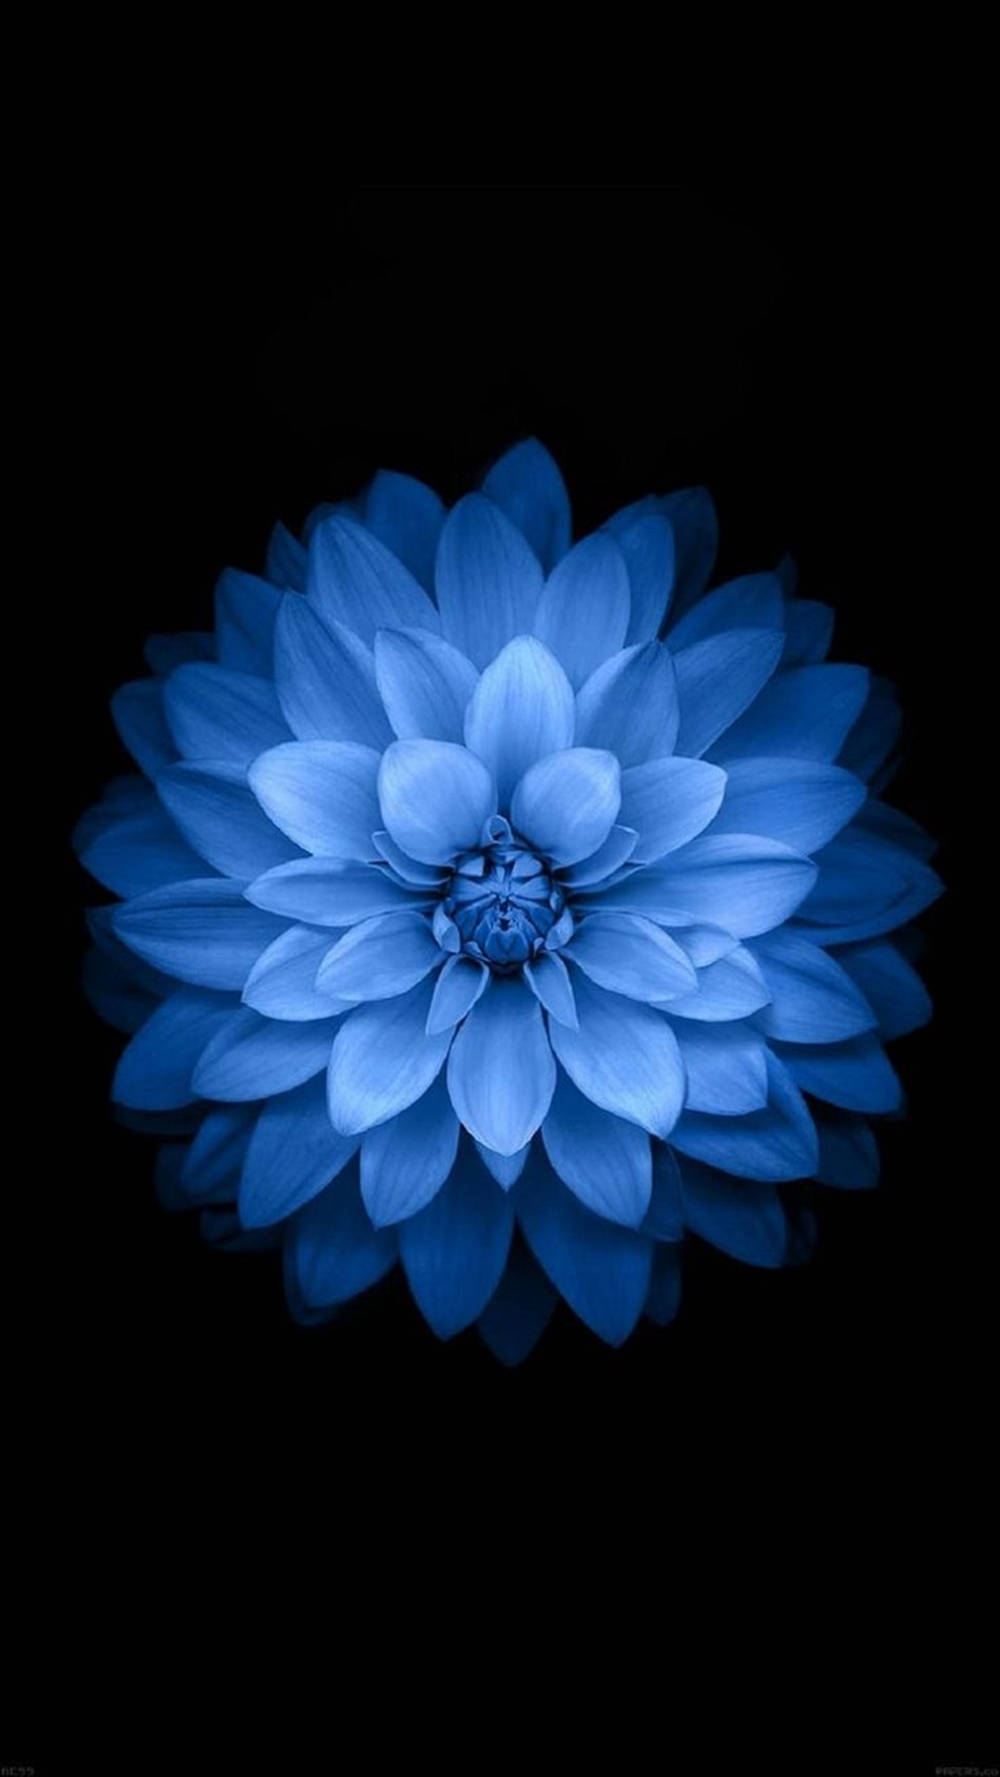 Exquisite Light Blue Dahlia In Bloom Background